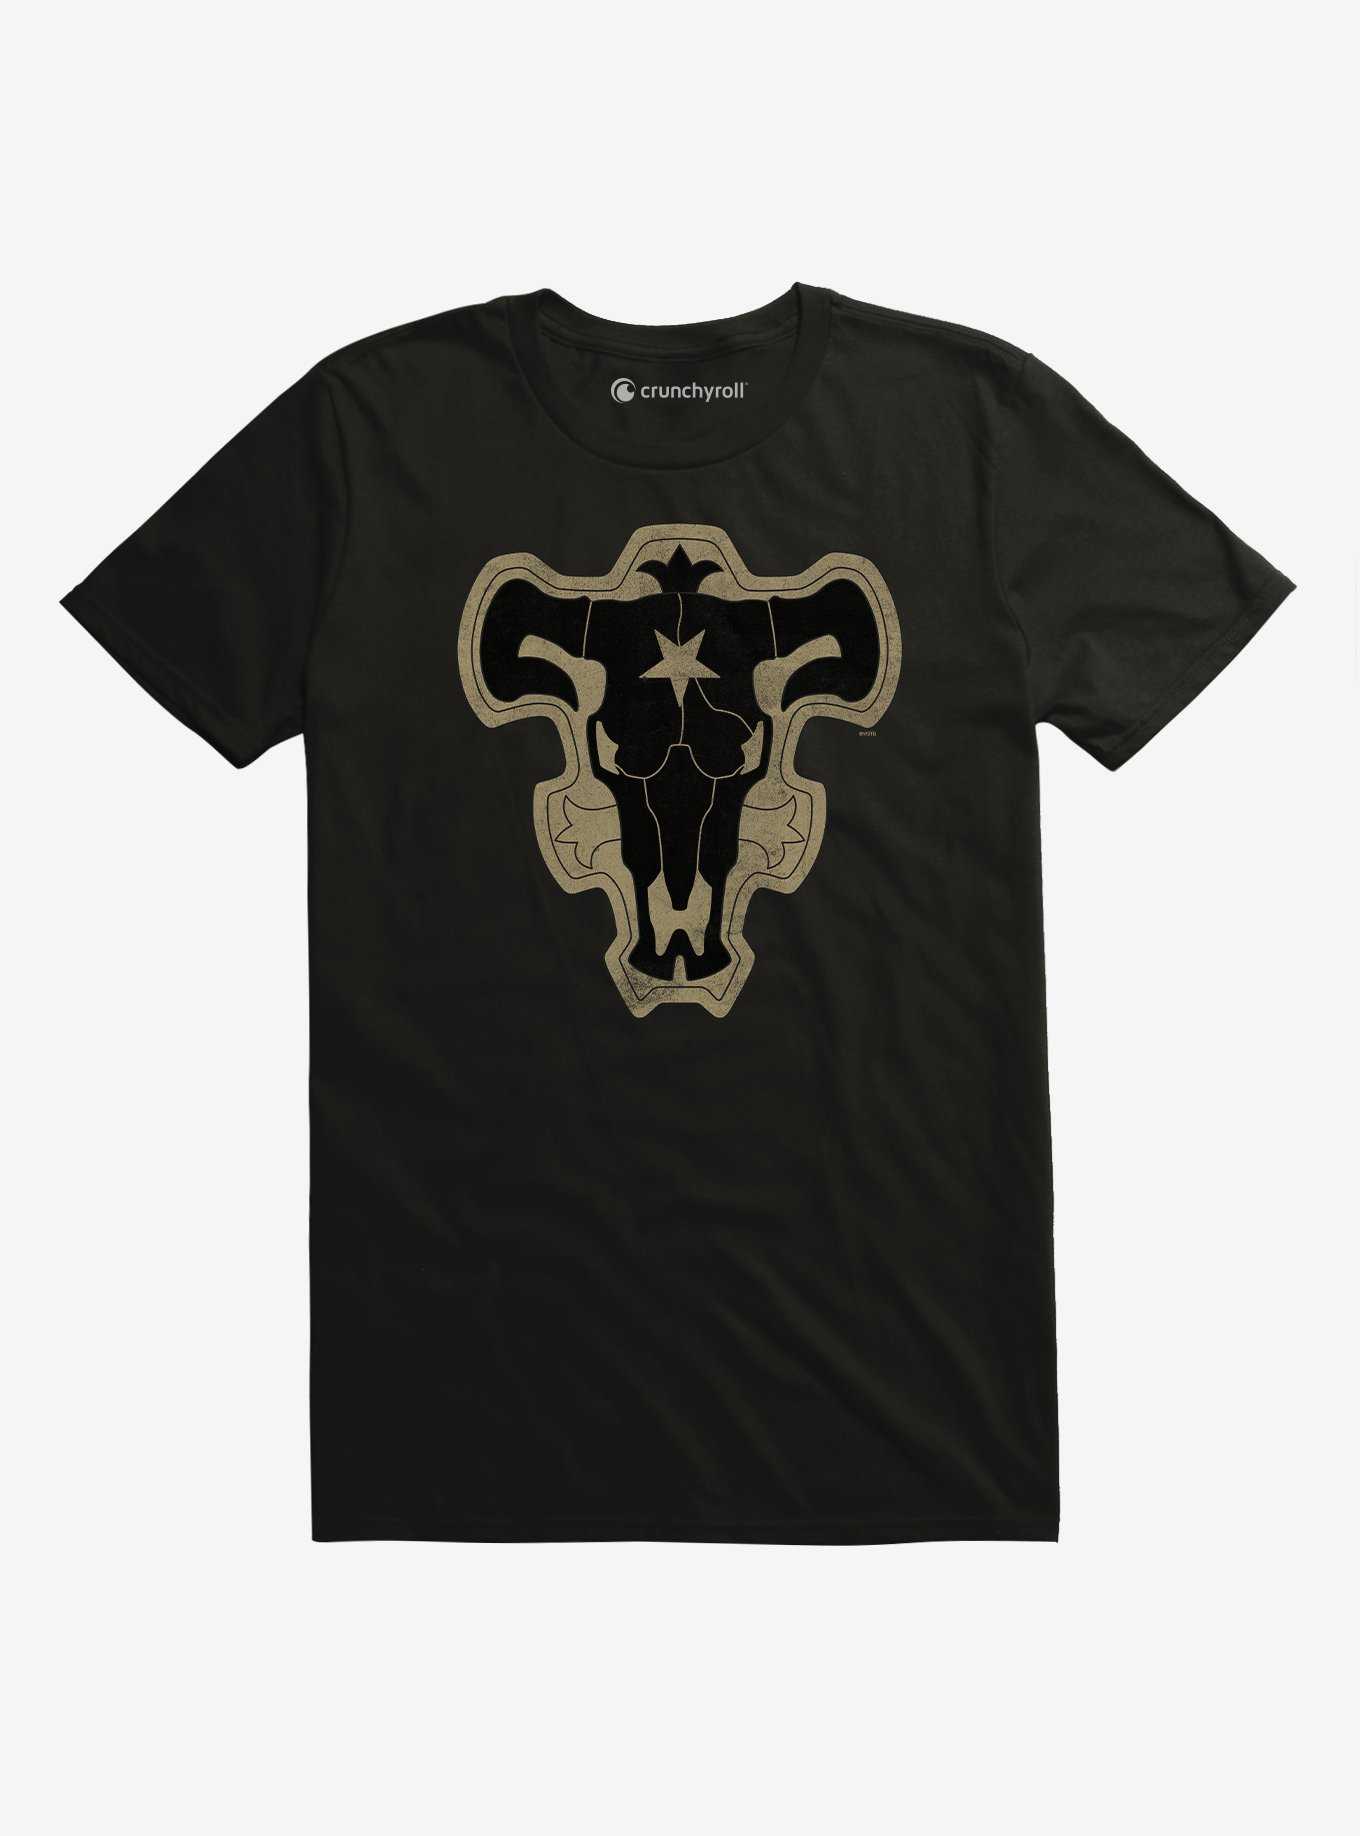 Black Clover Bull T-Shirt, , hi-res